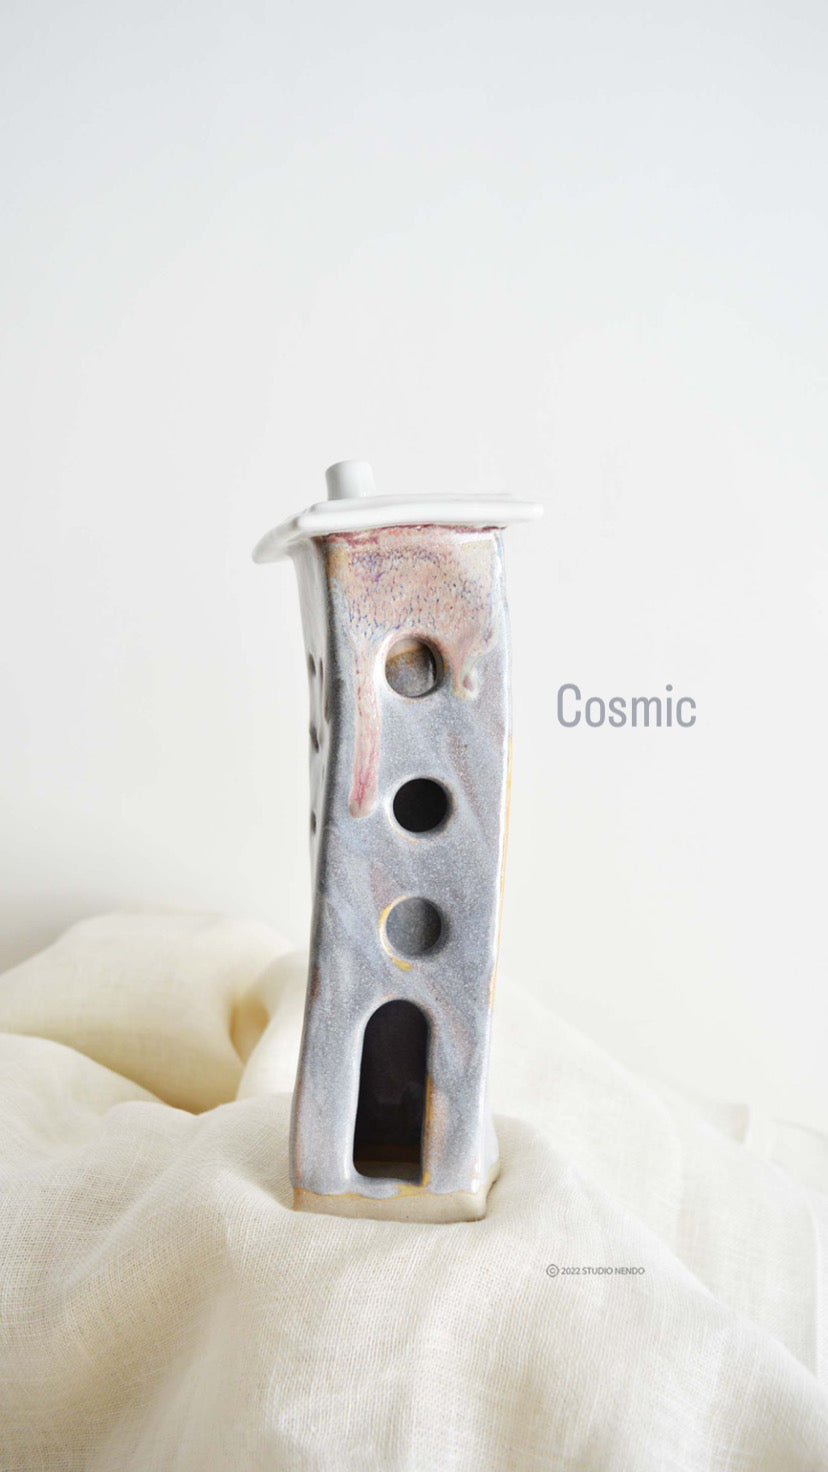 COSMIC- Topsy Turvy Tealight Housing Society- Ceramic Sculpture